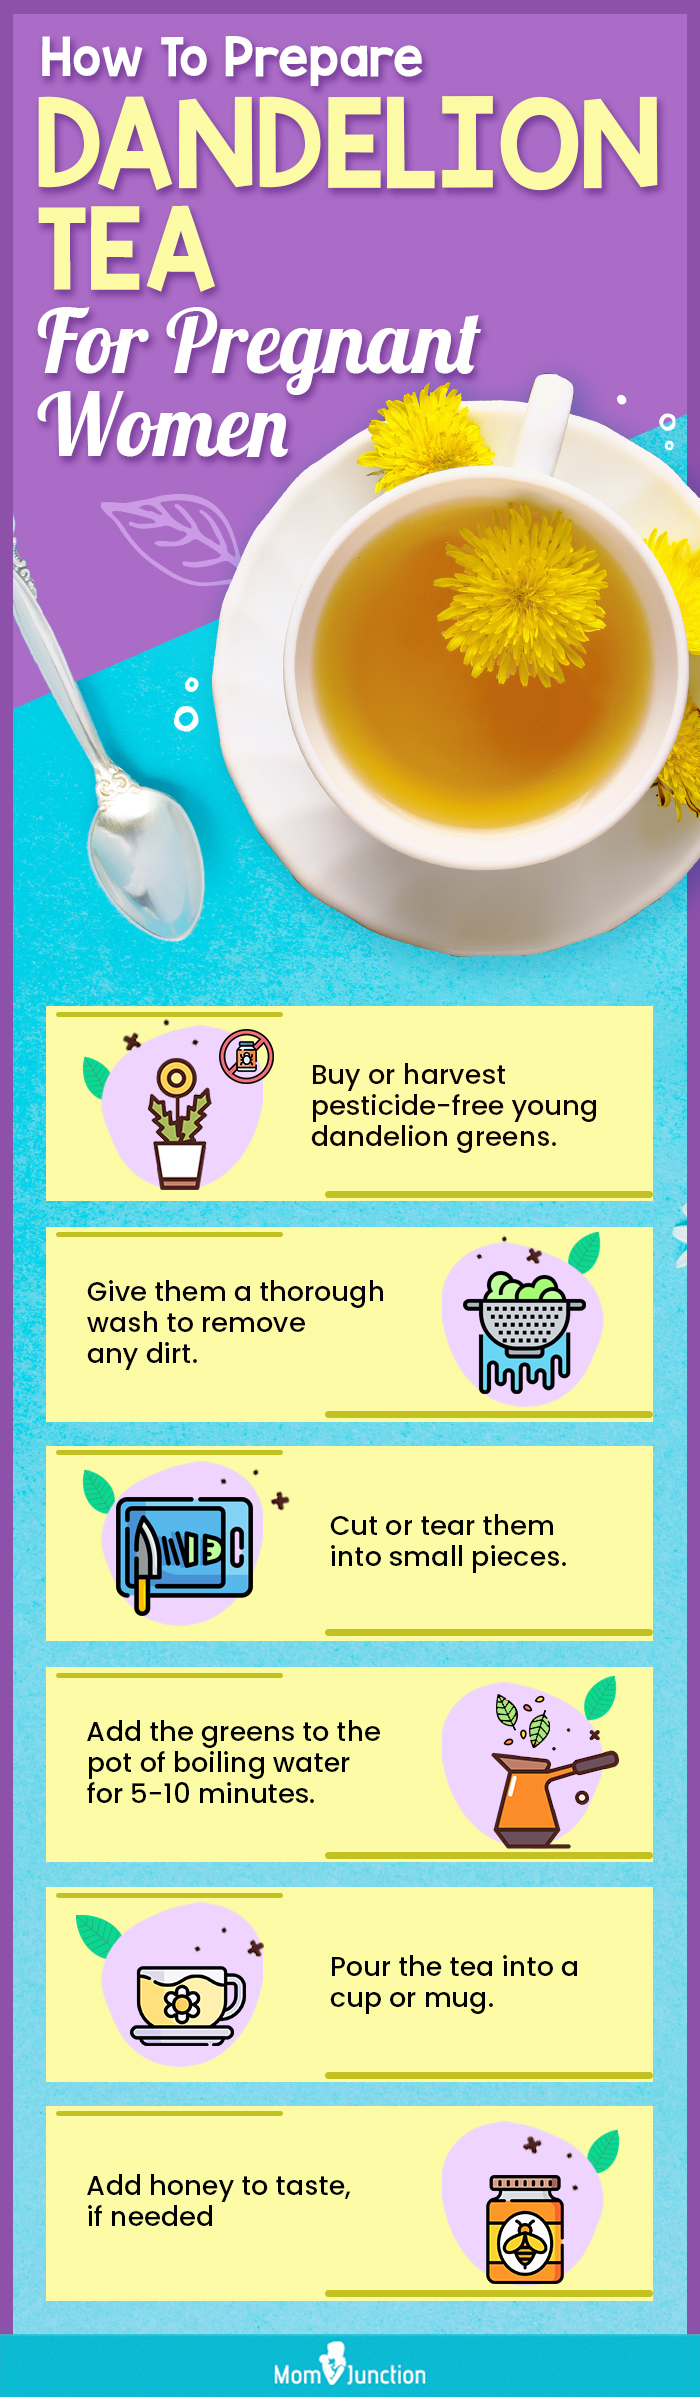 how to prepare dandelion tea for pregnant women (infographic)